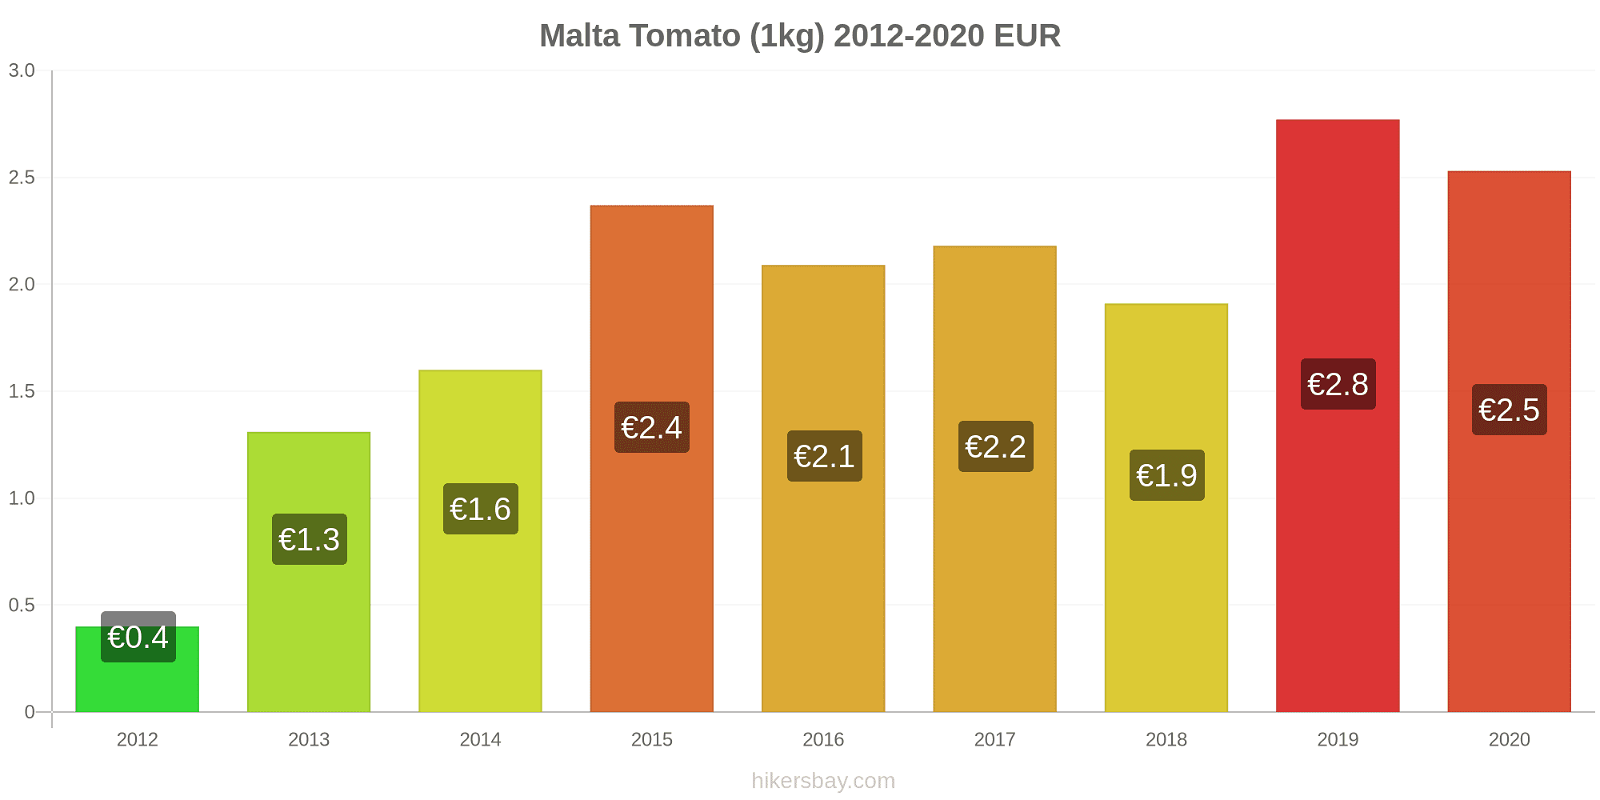 Malta price changes Tomato (1kg) hikersbay.com